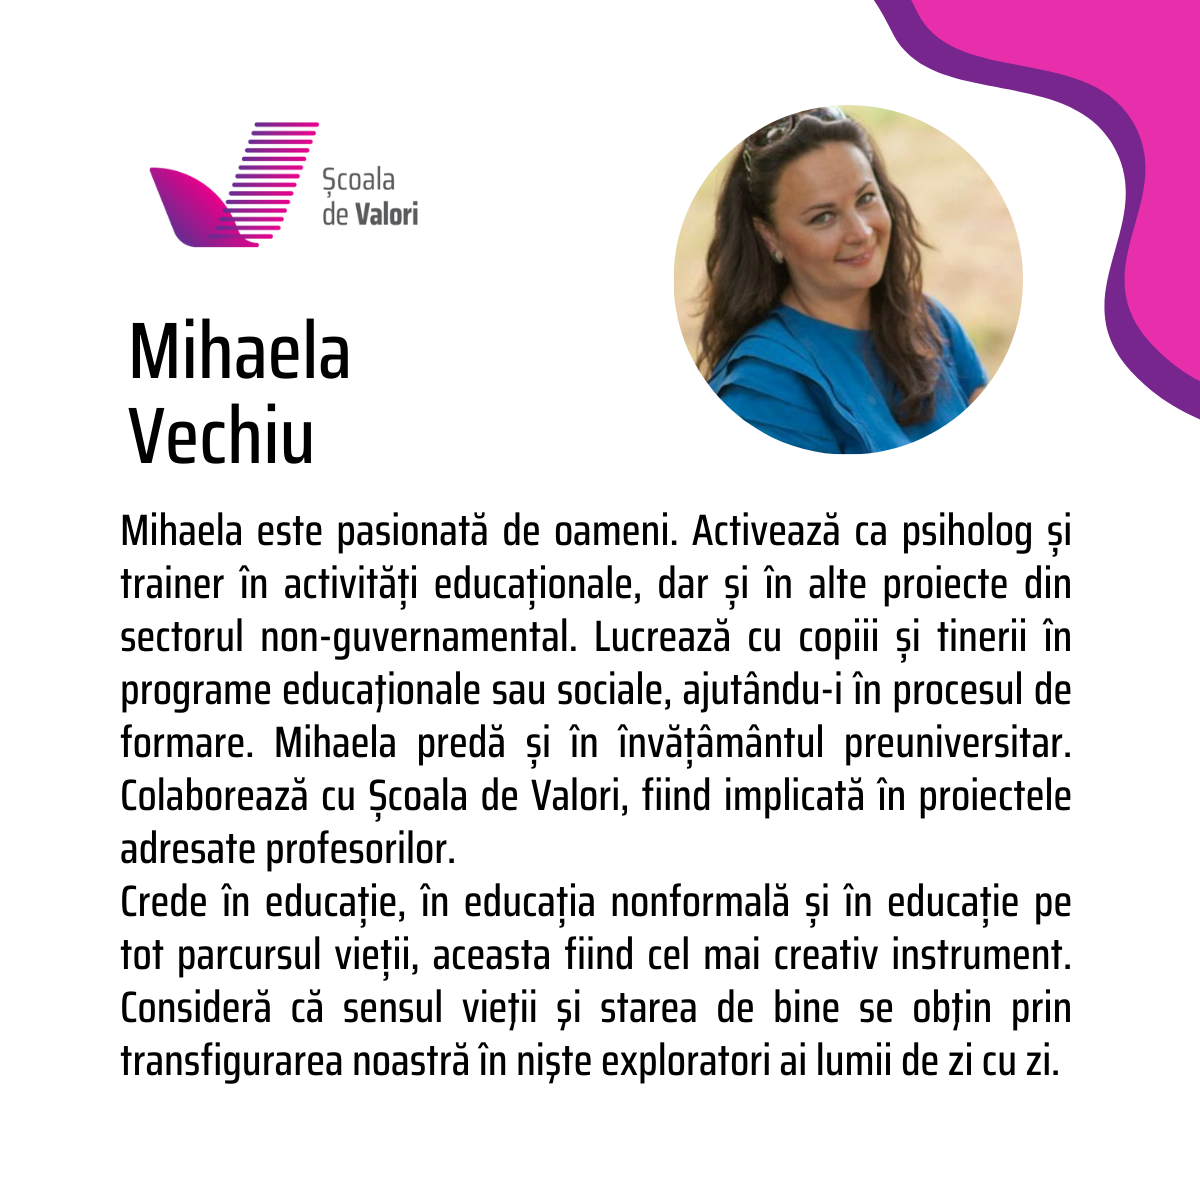 Mihaela Vechiu